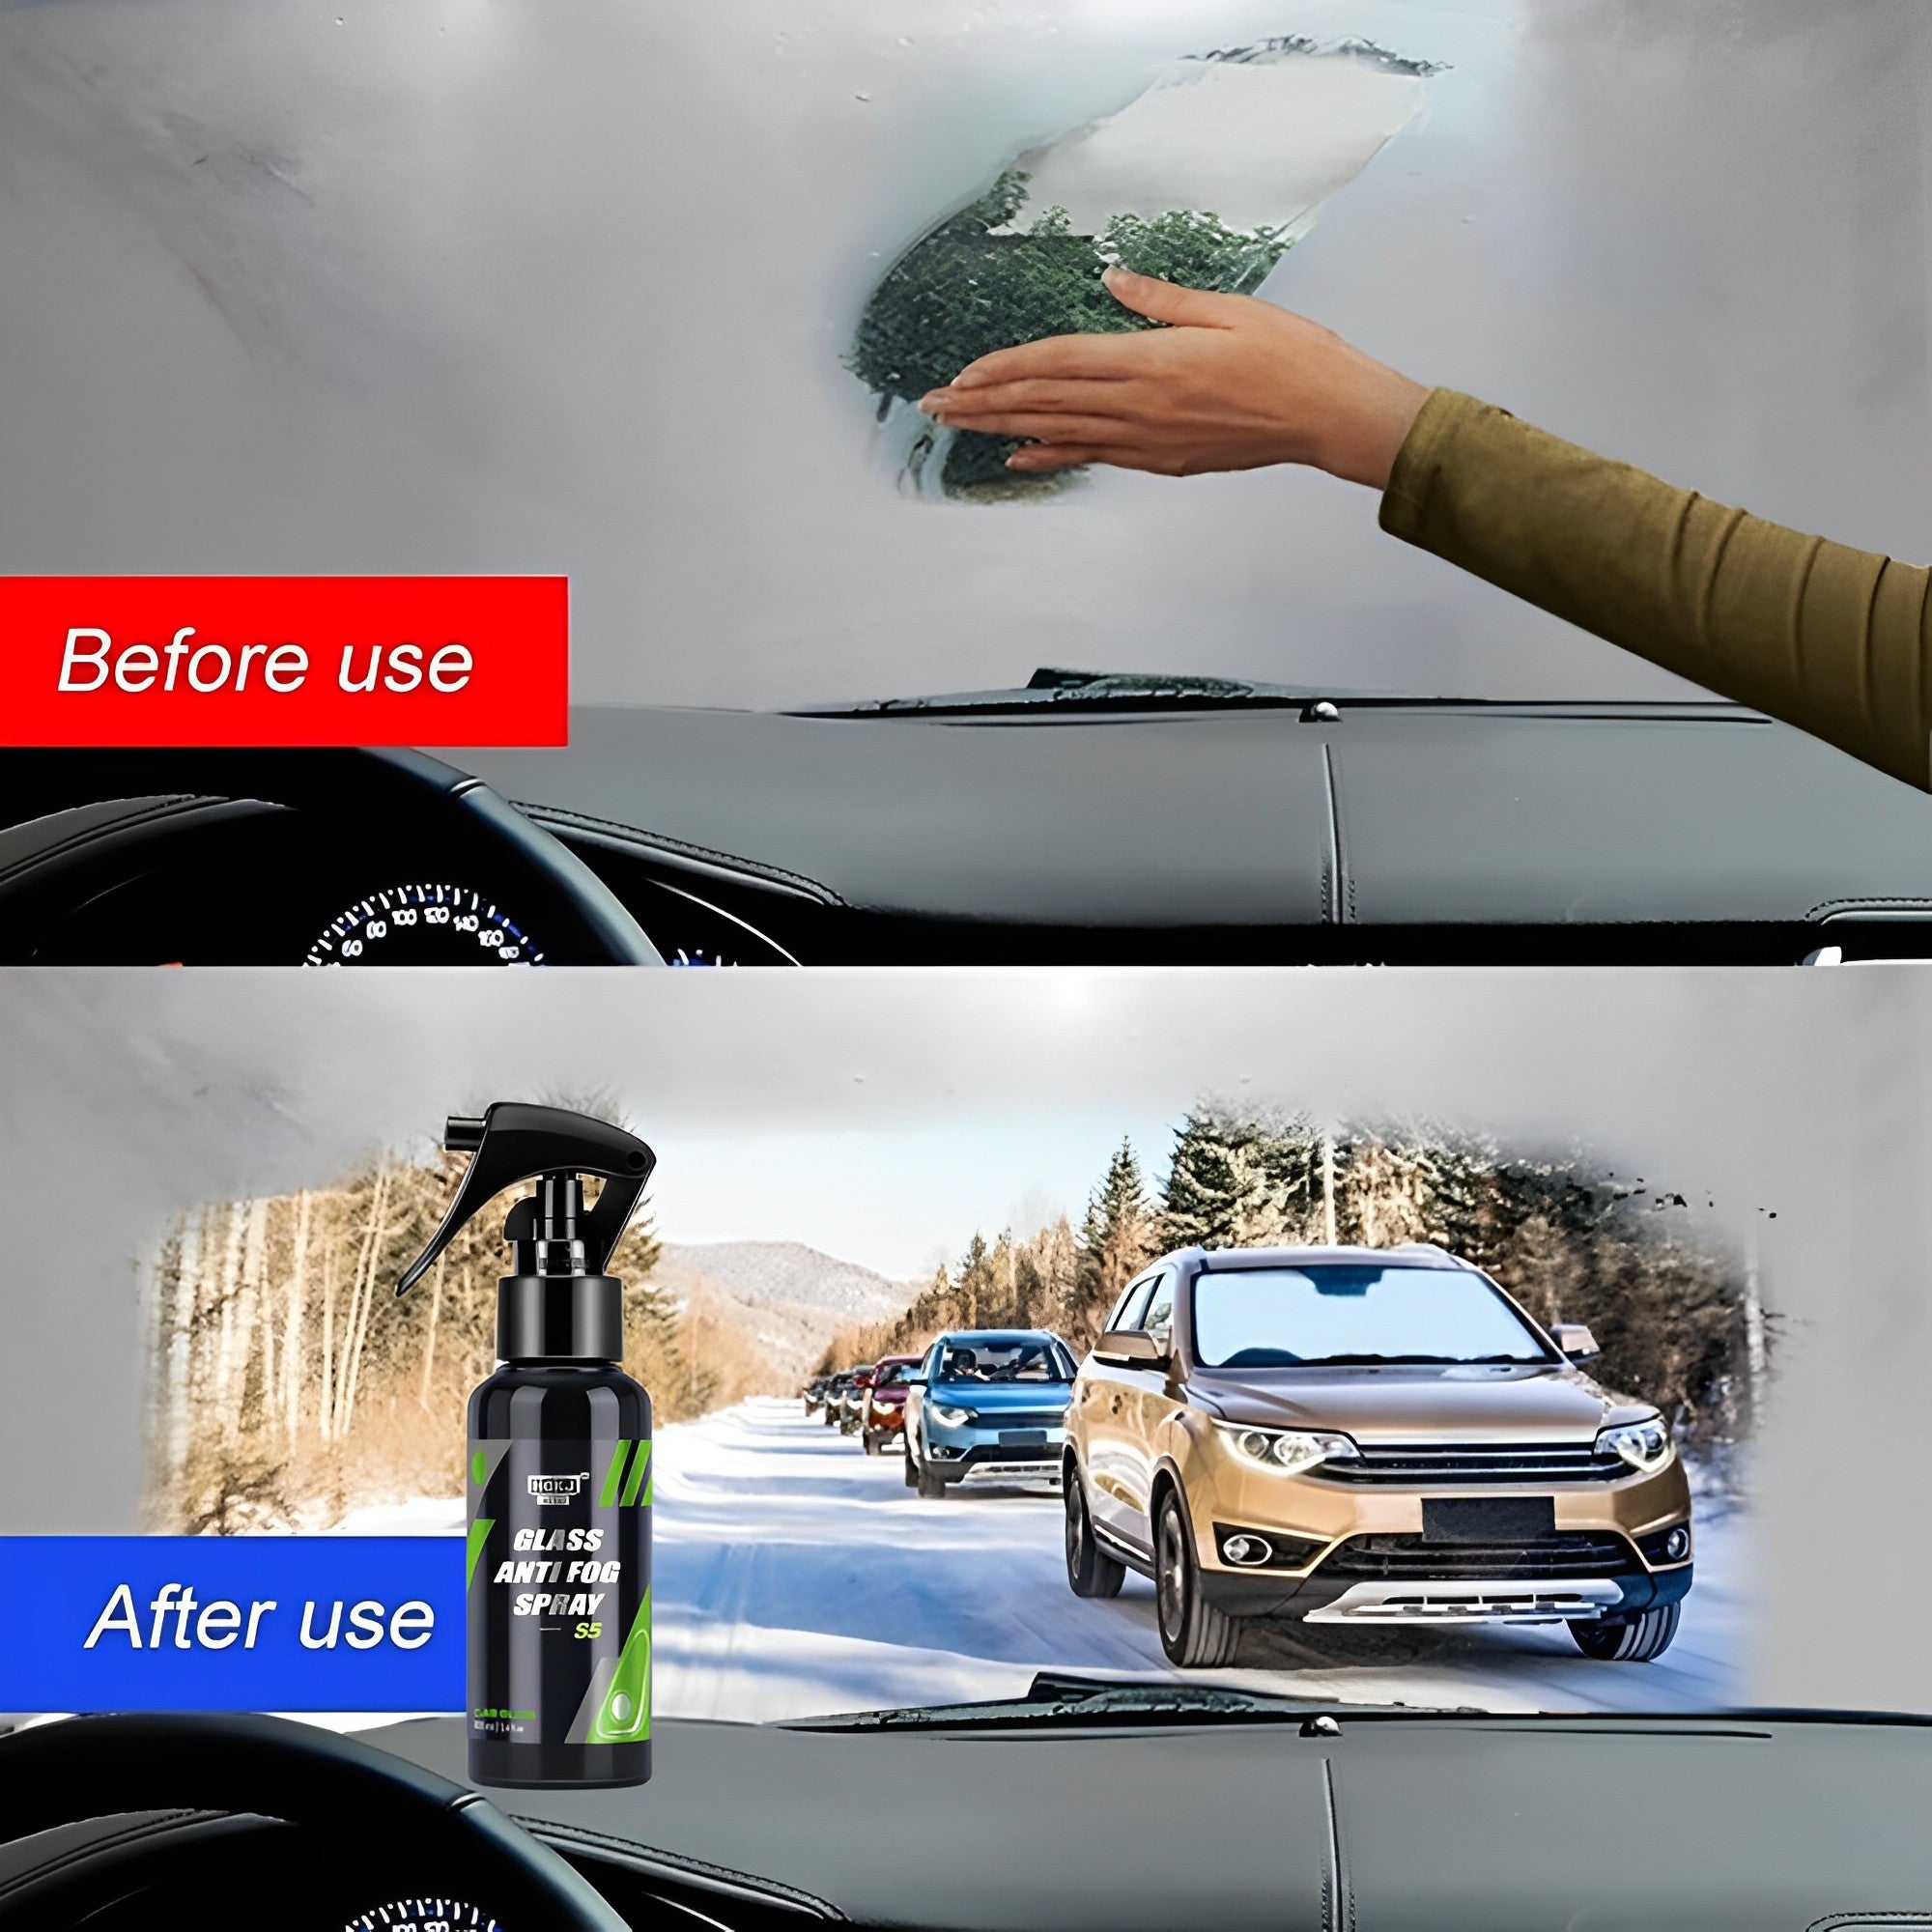 Antifog Coating Anti-fog For Car Windshield Windows Screen Driving